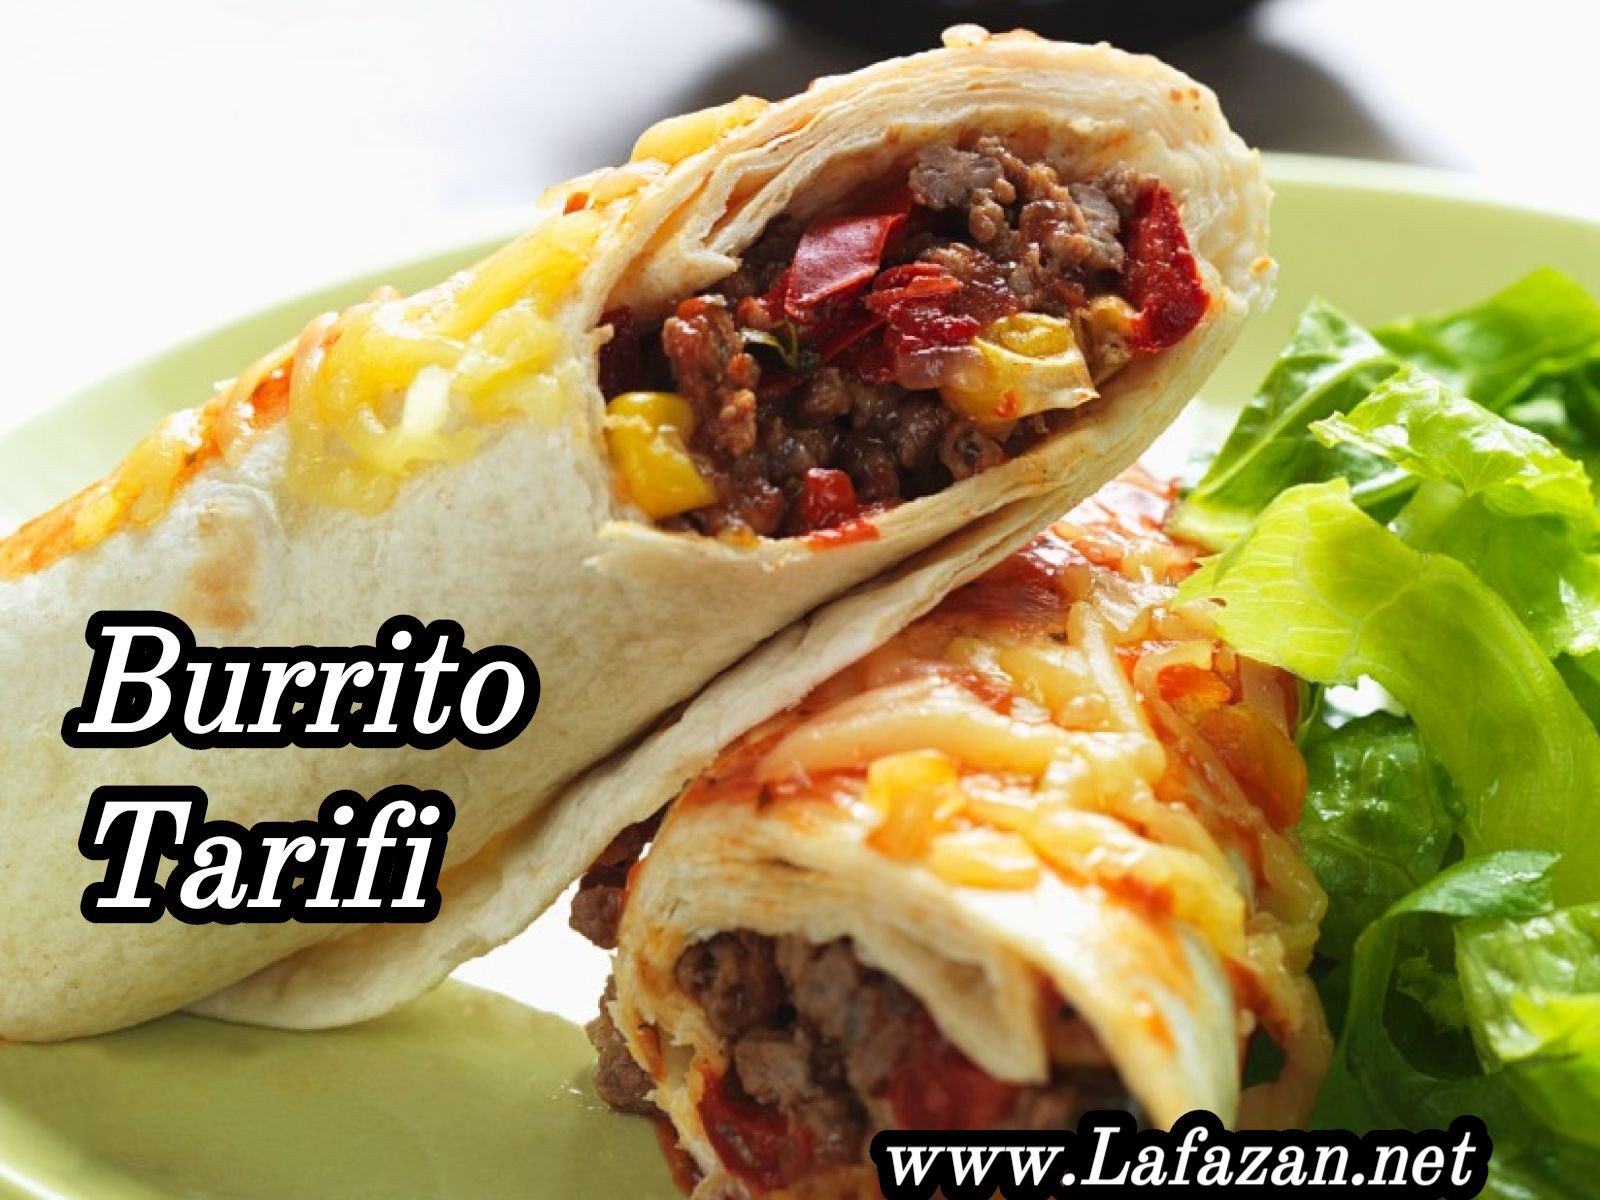 Burrito Tarifi